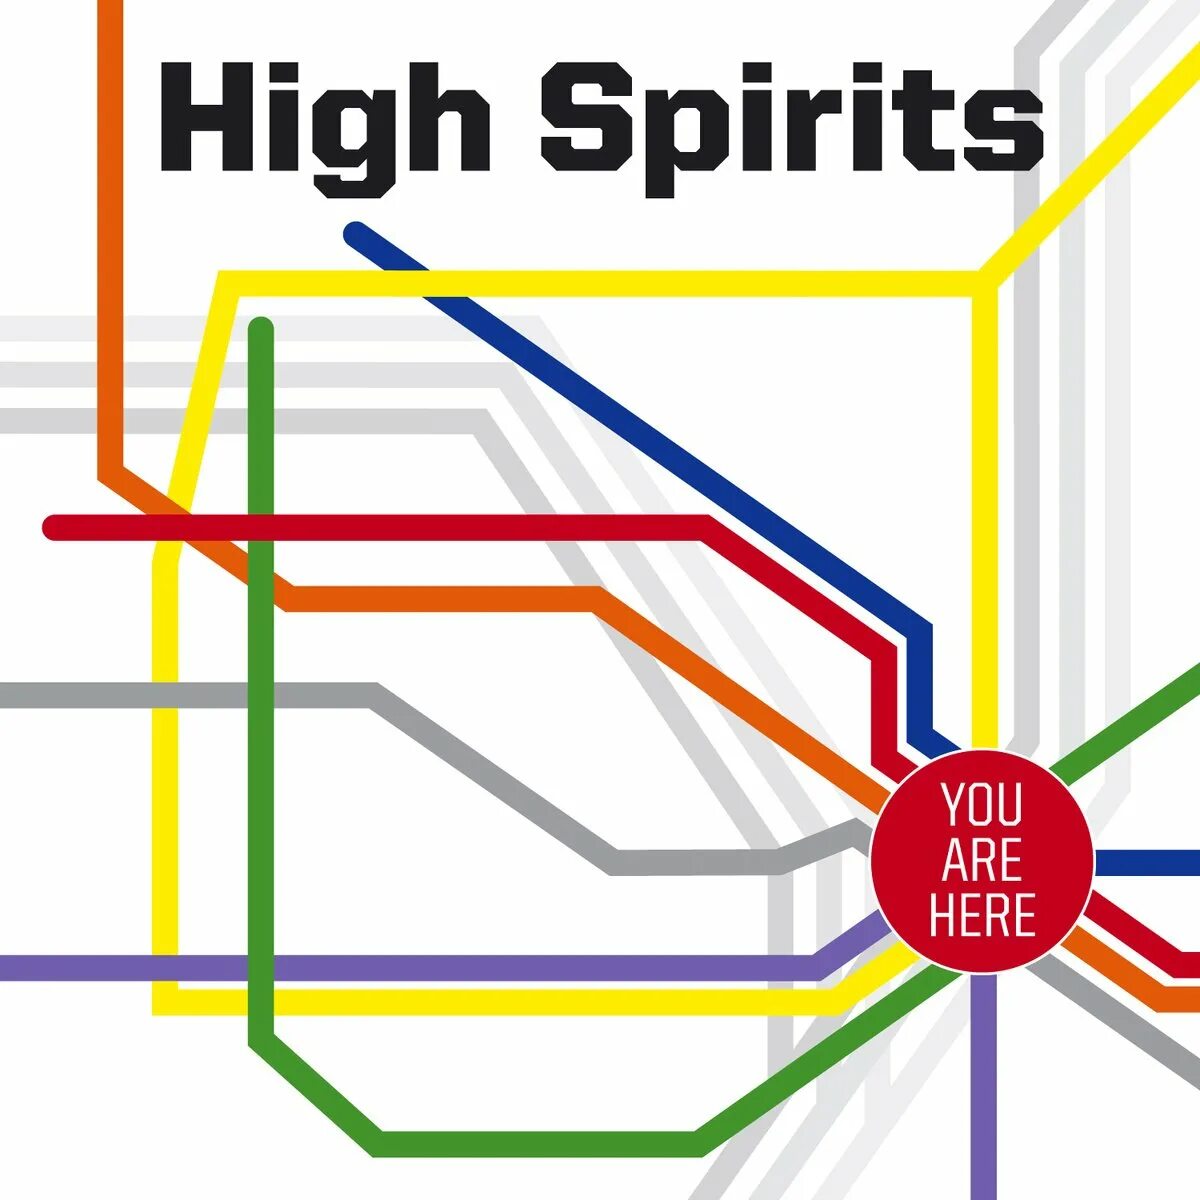 You are here world. High Spirits. High Spirits_2014_you are here. High Spirits - 2011 - another Night. Are you High.